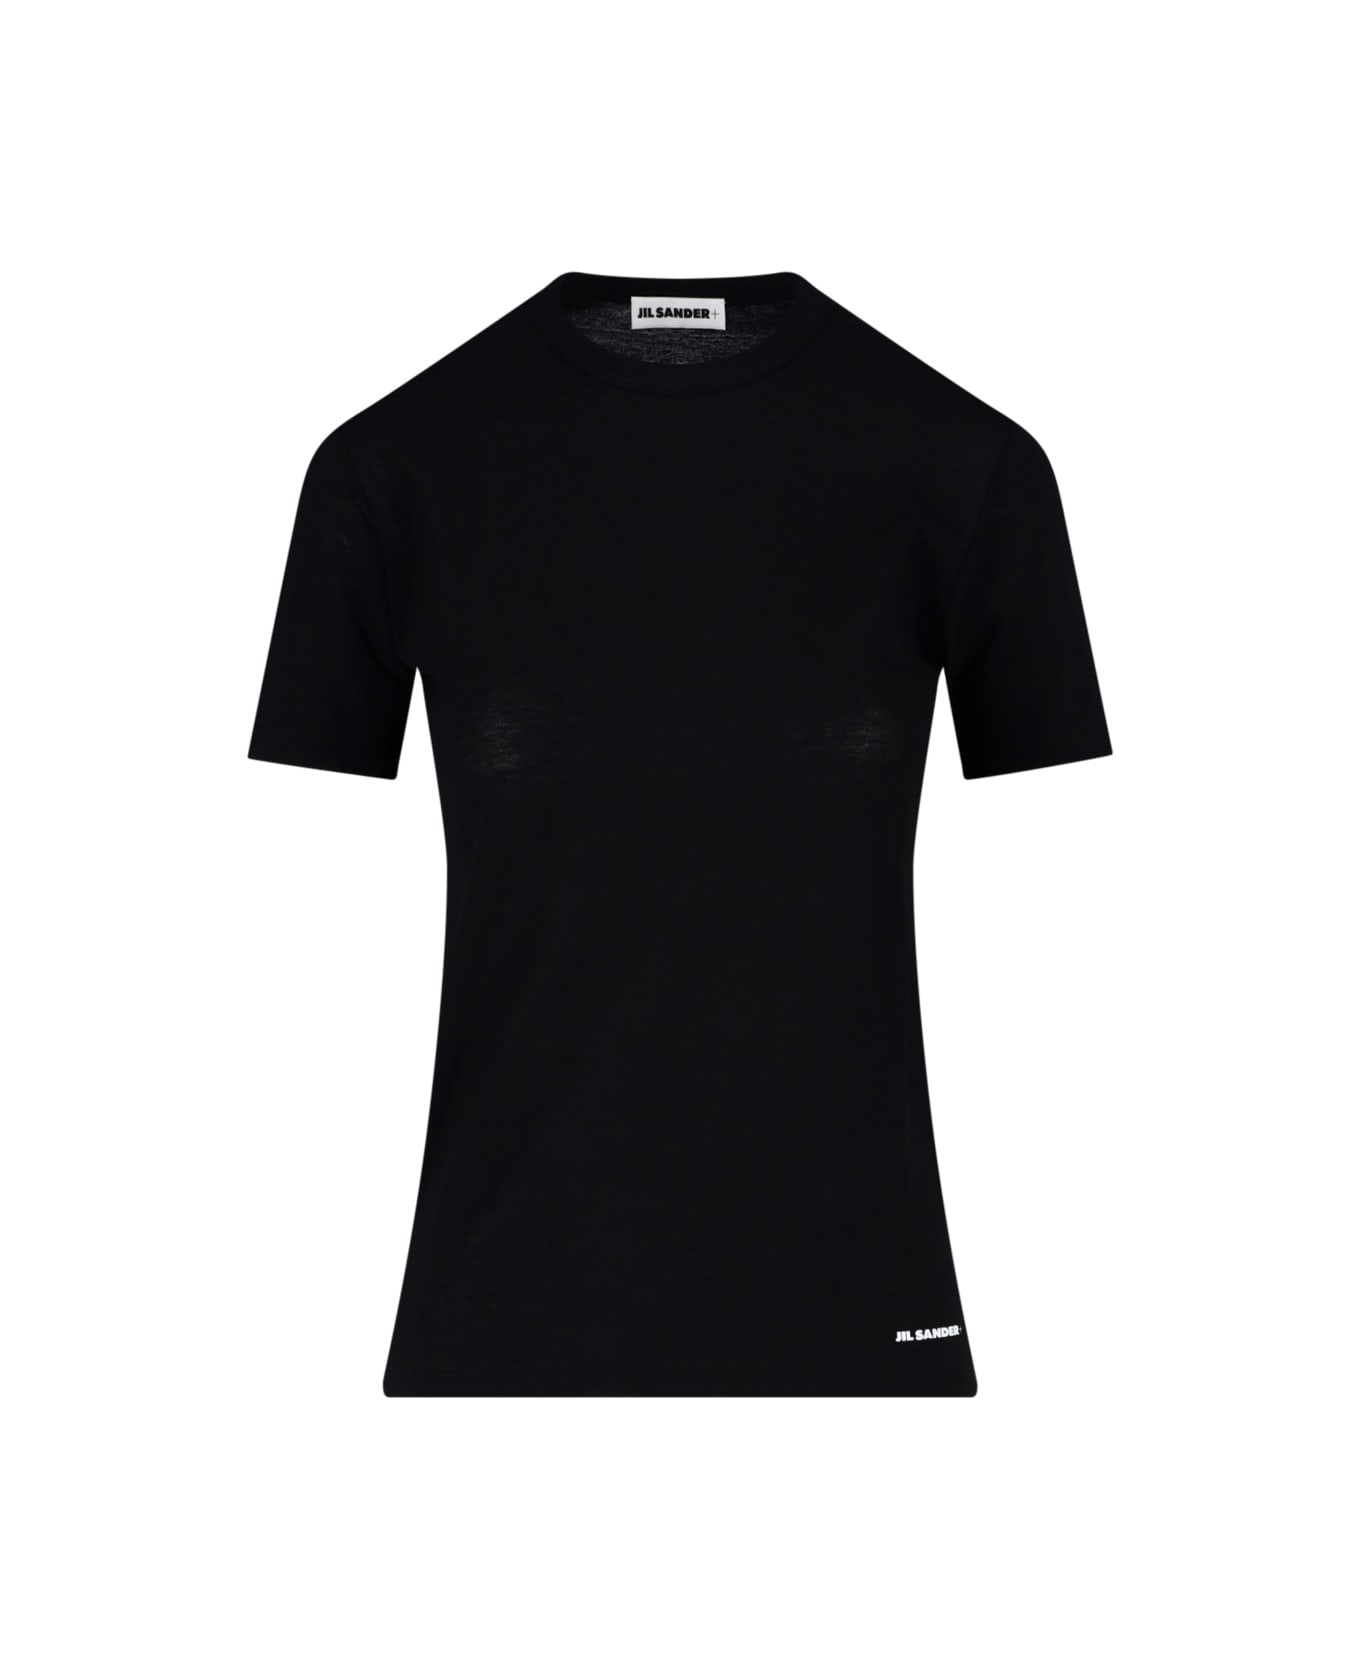 Jil Sander Classic T-shirt - Black